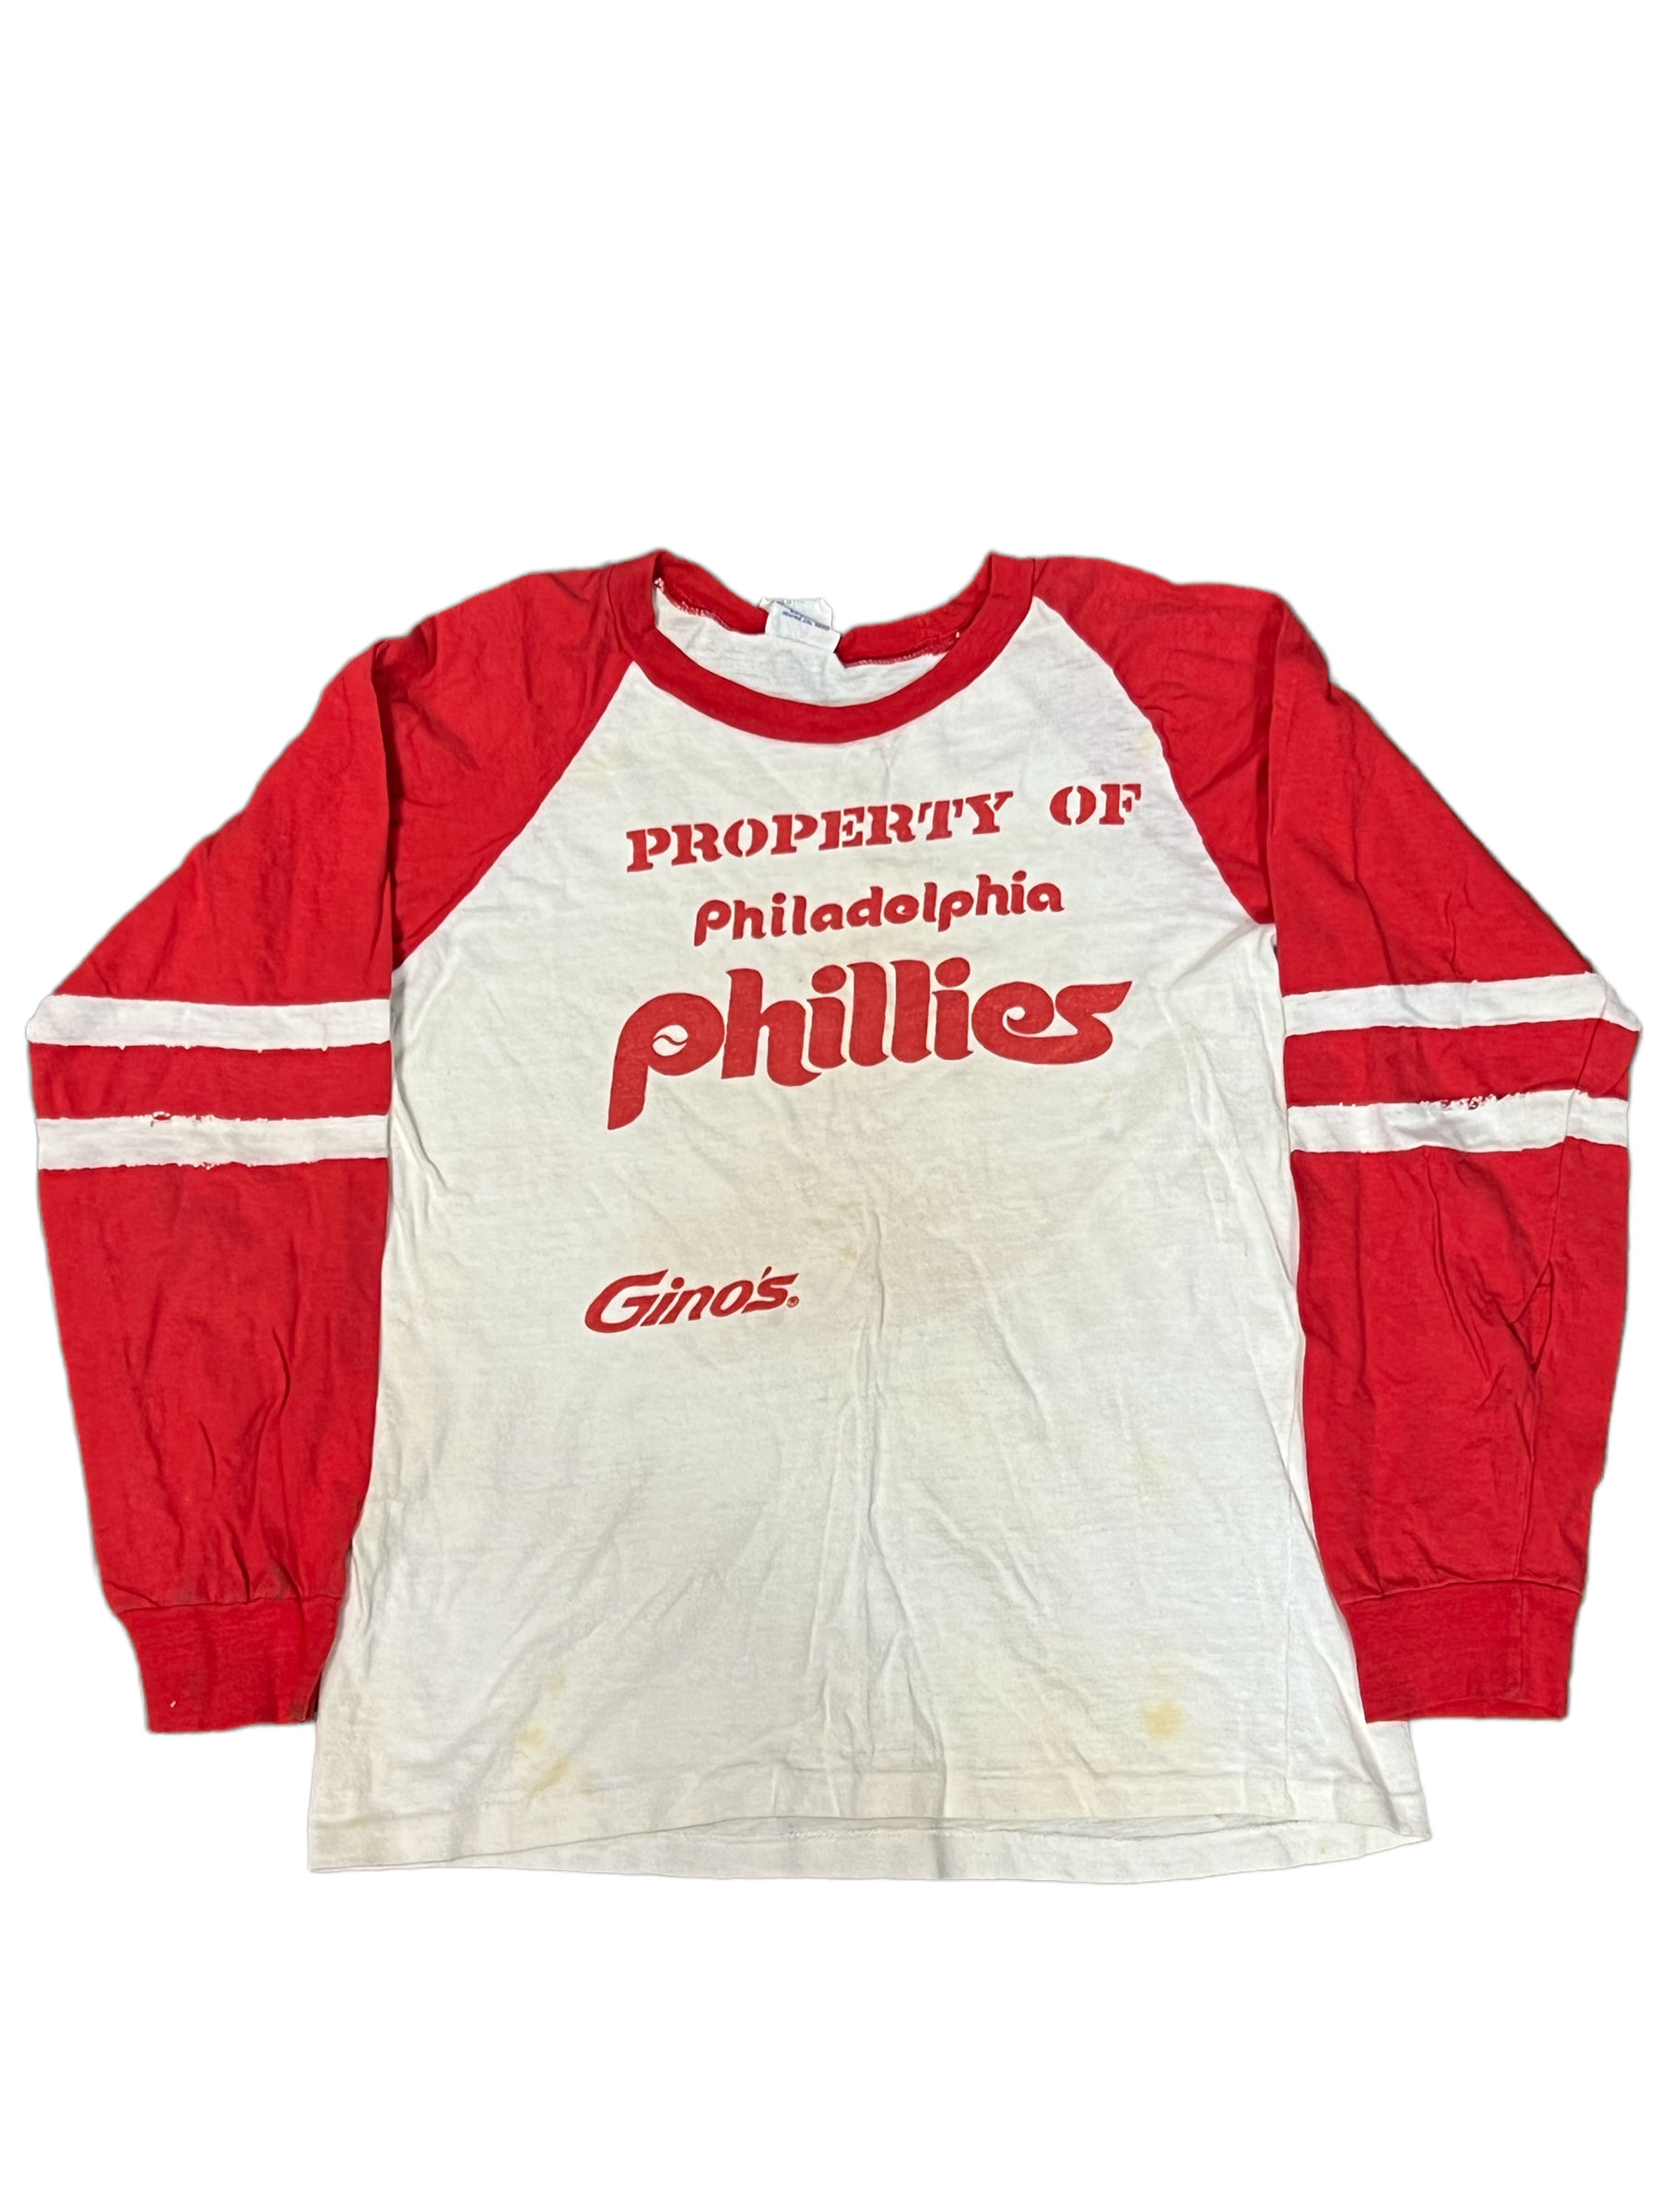 phillies jersey shirts